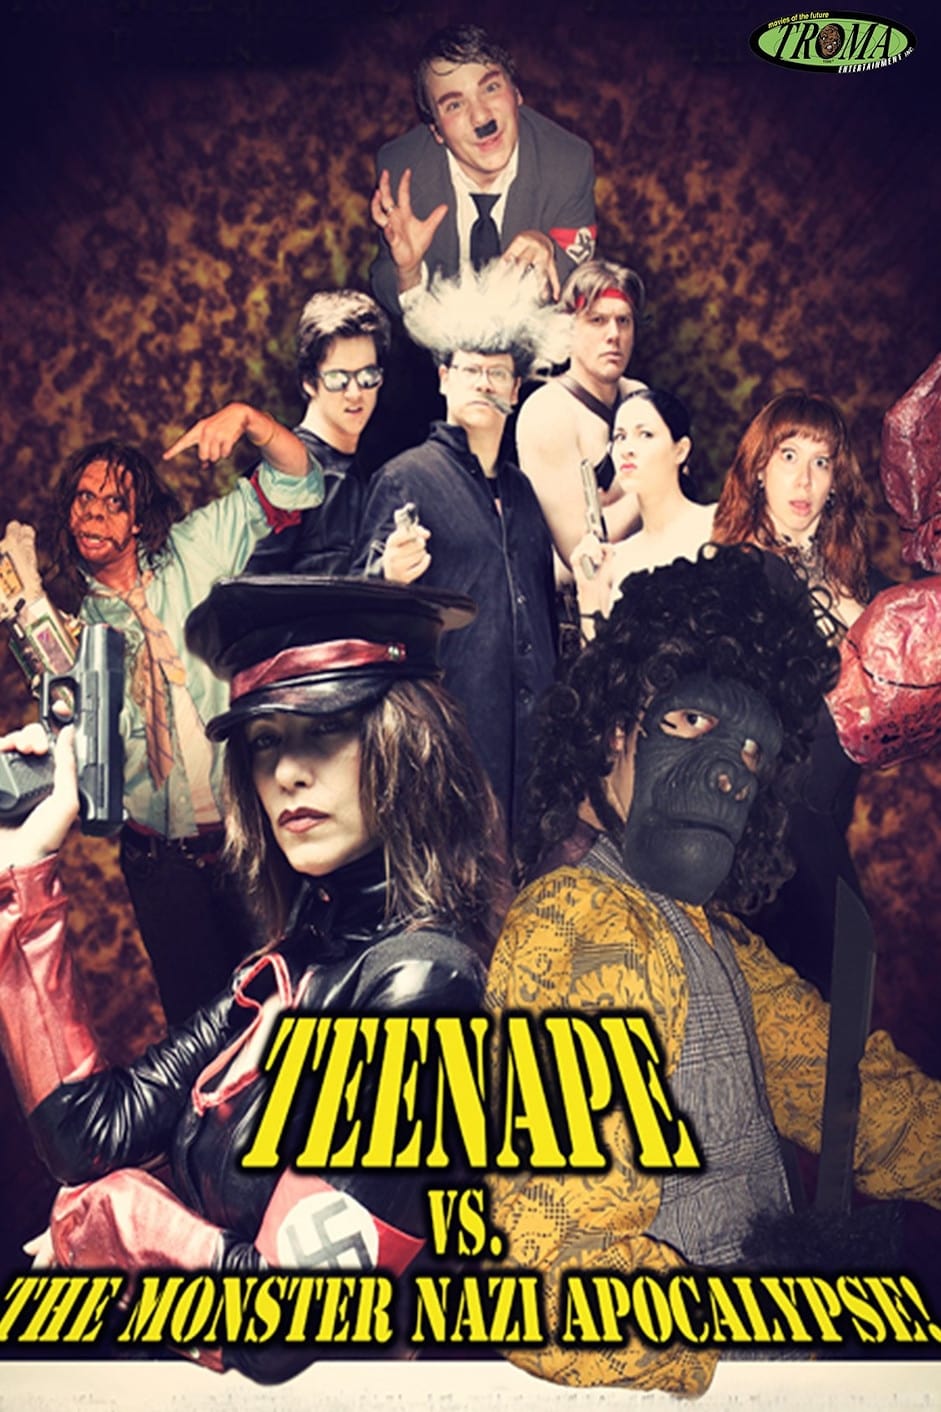 Teenape Vs. The Monster Nazi Apocalypse (2012)